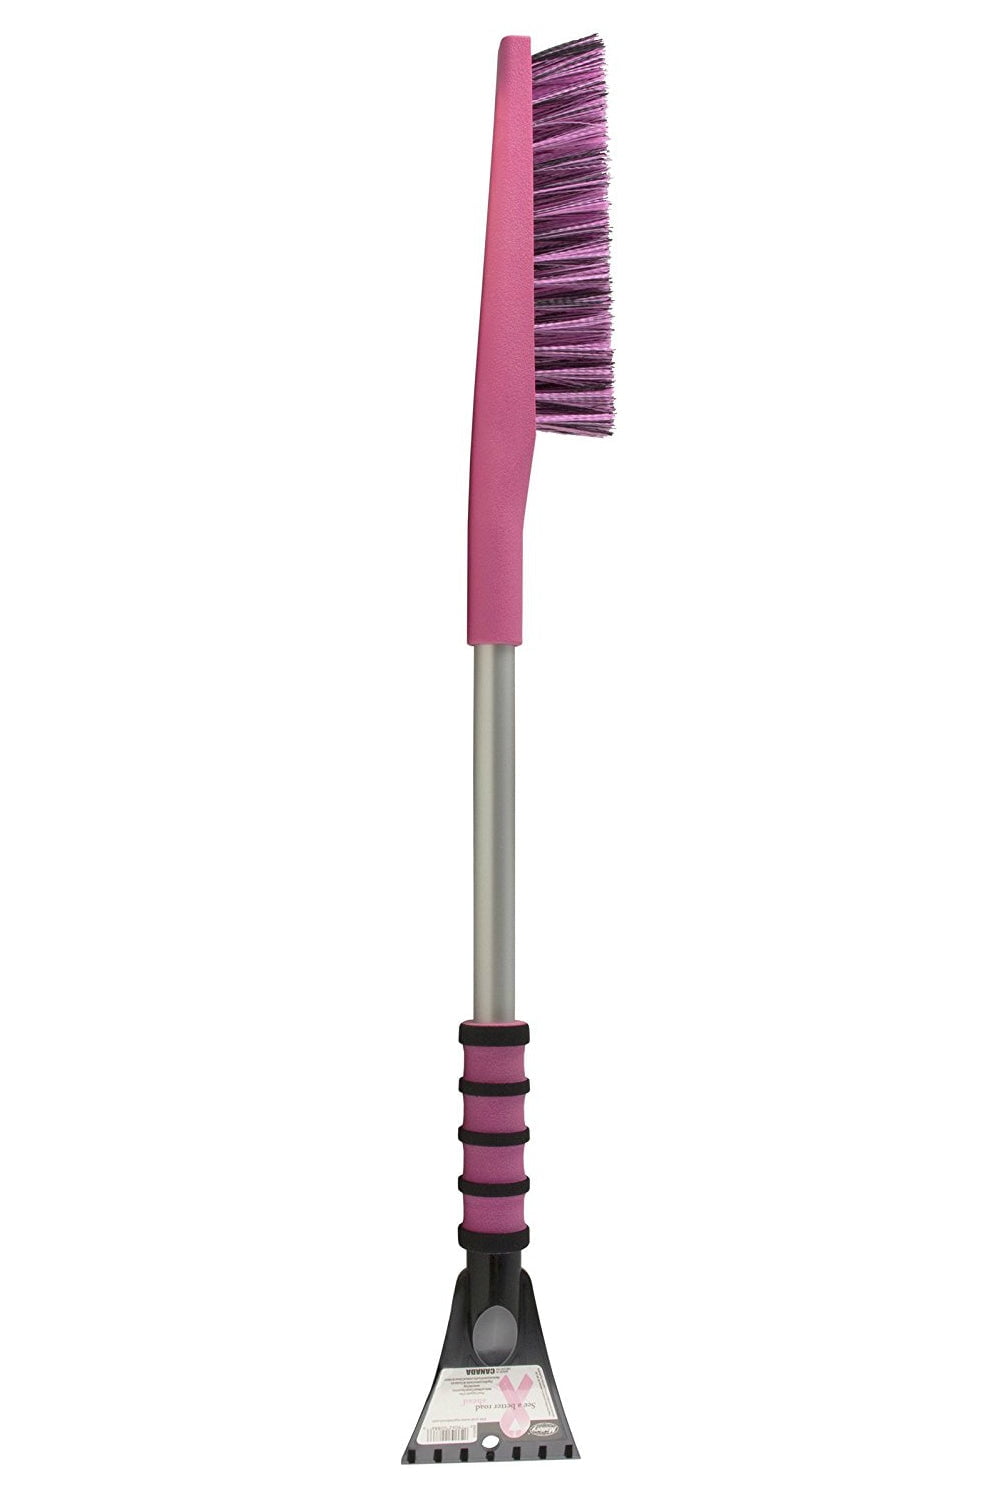 Mallory S30-886pkus Snow Brush & Ice Scraper with Foam Grip, Pink, 31